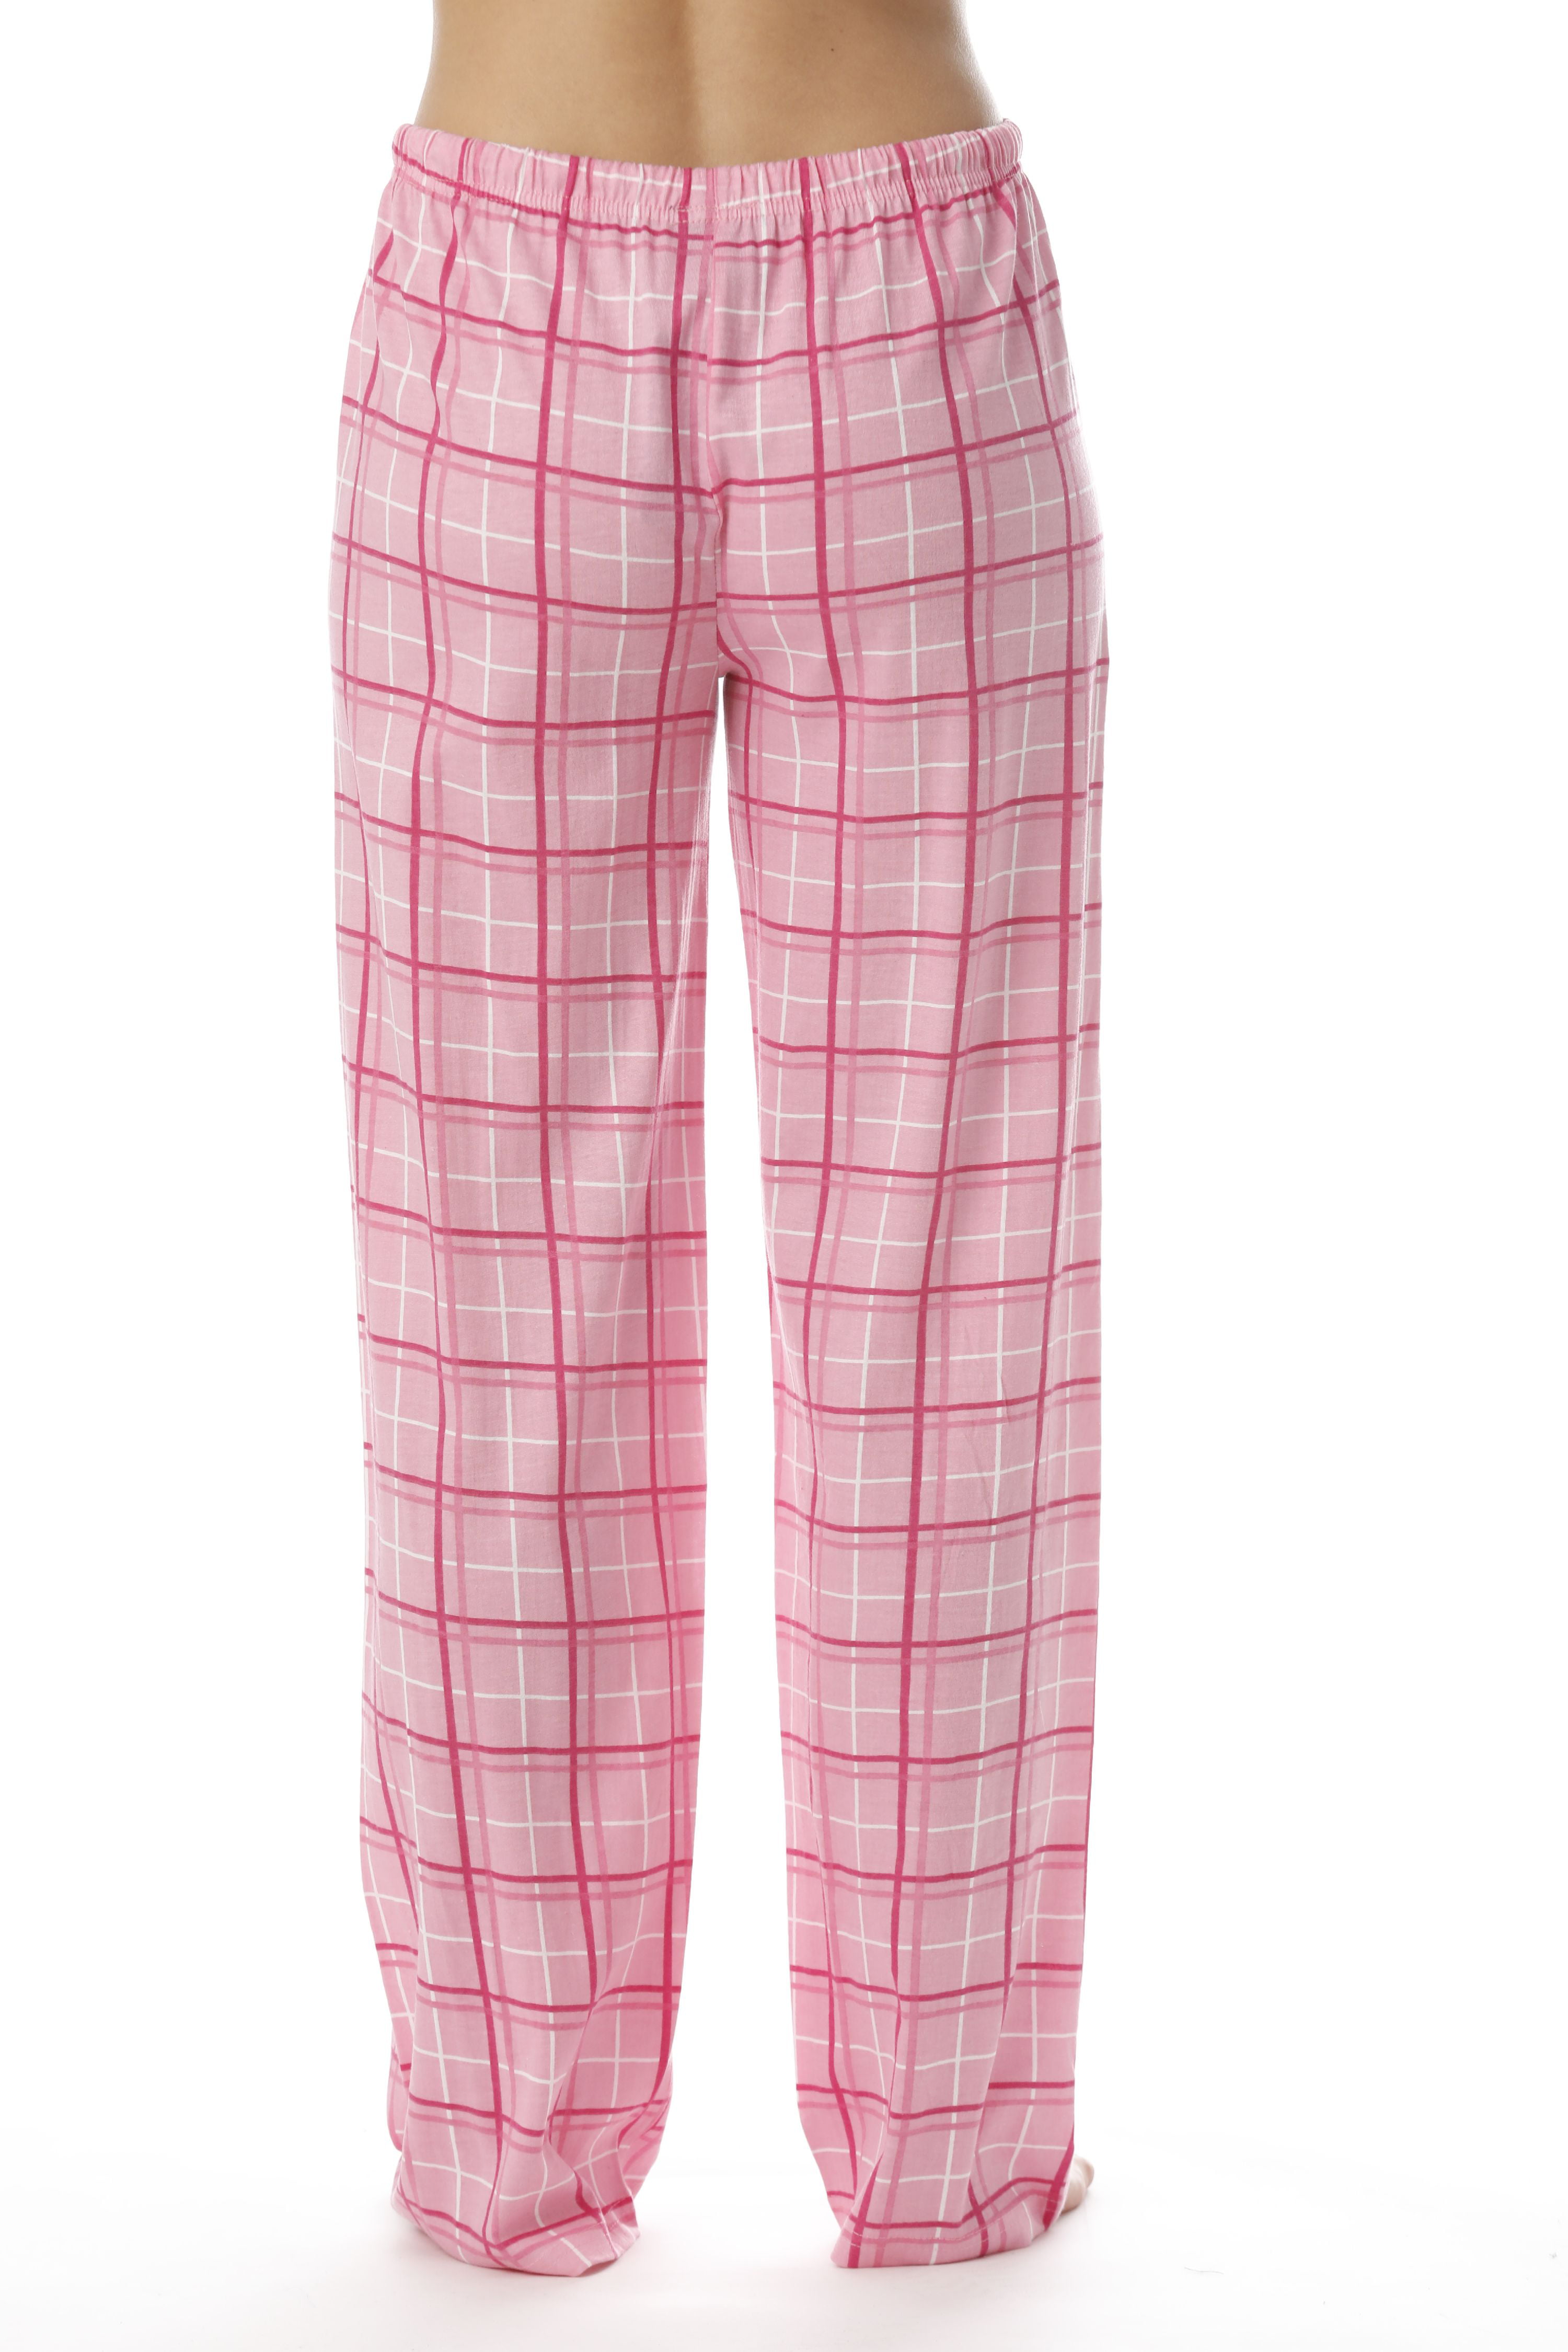 Hot Pink Plaid PJ Pants